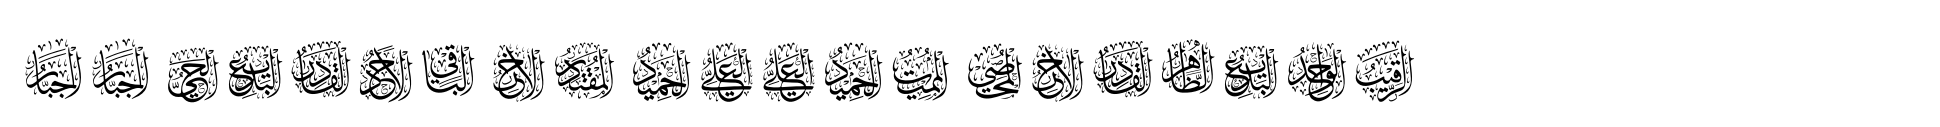 99 Names of ALLAH Compact